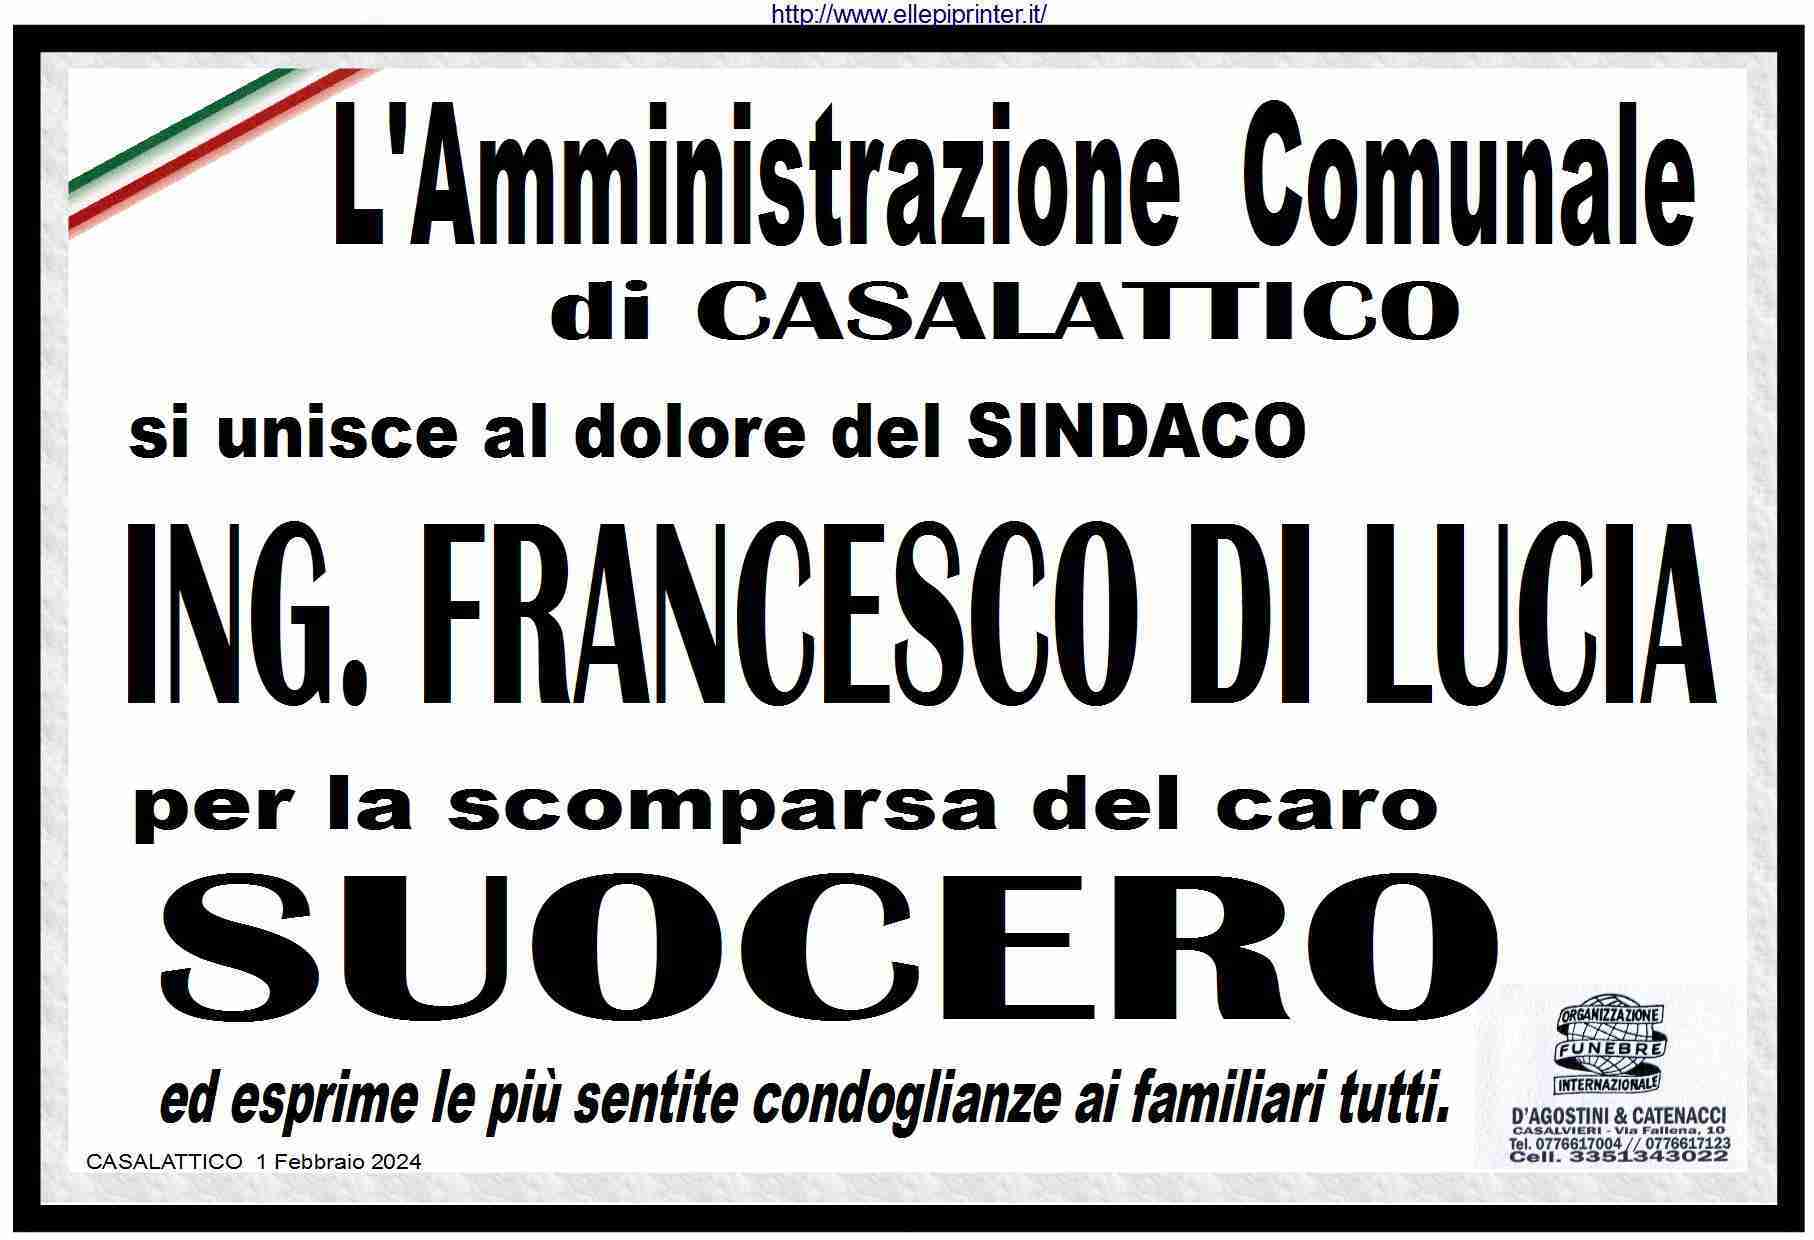 Francesco Di Lucia